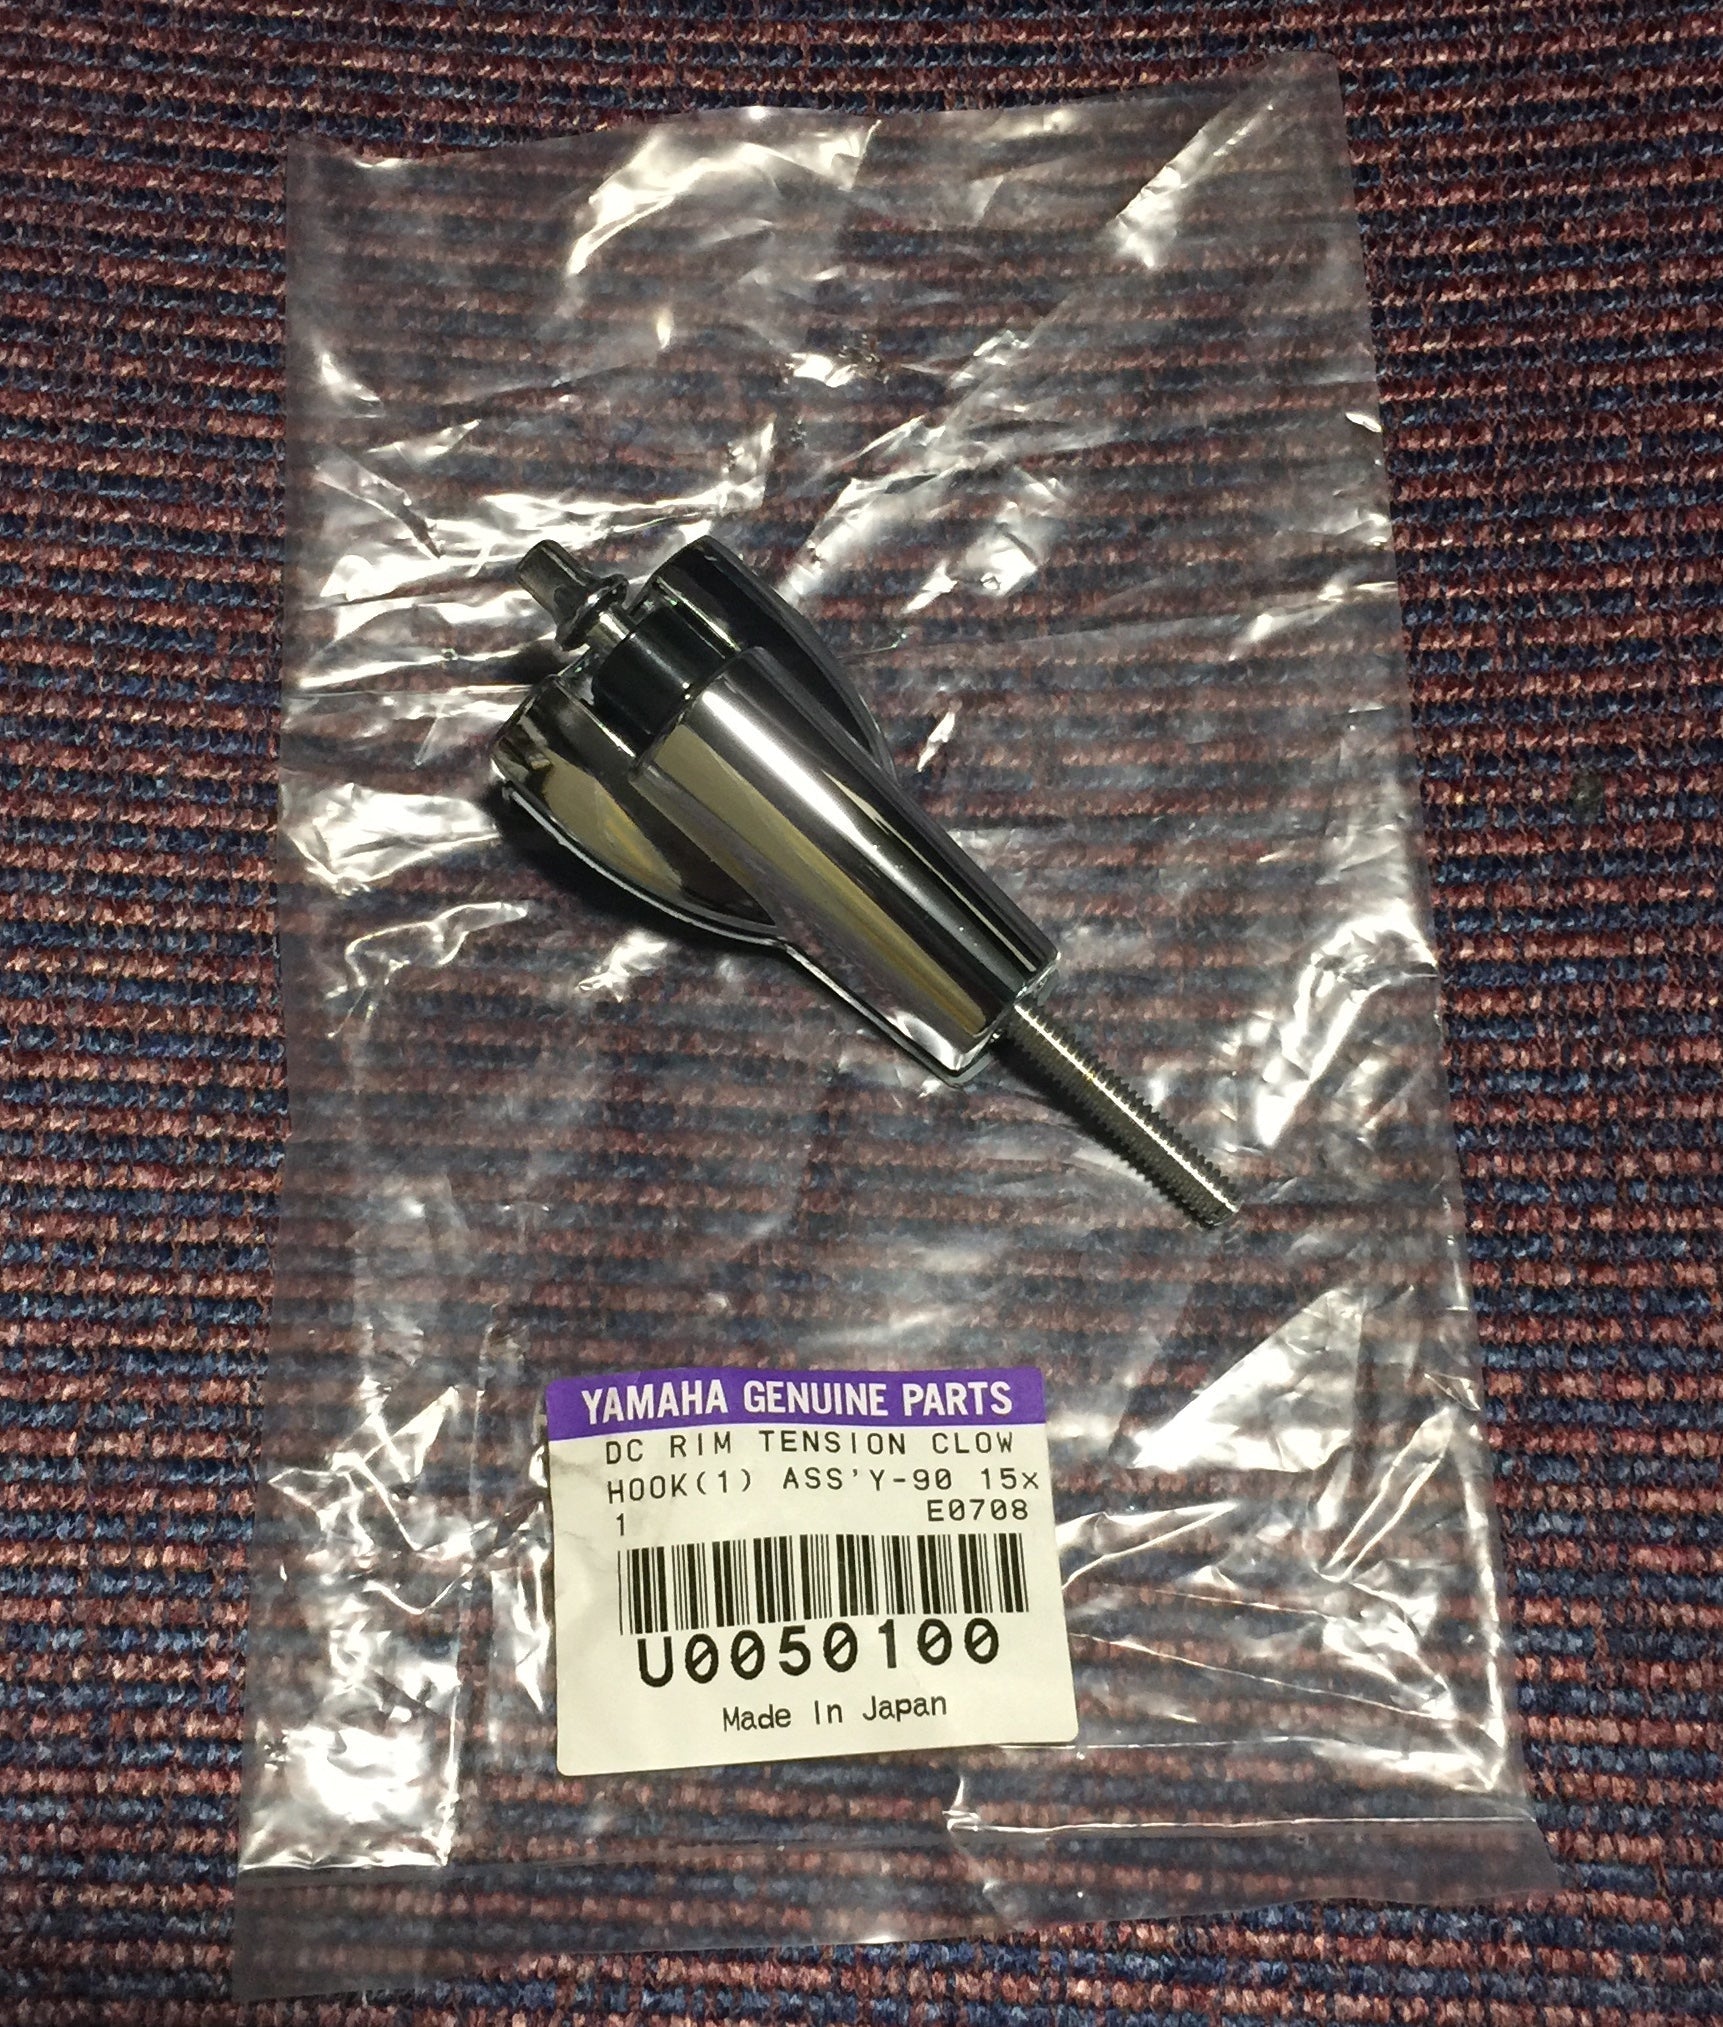 Yamaha Absolute Tension Claw and Rod (U0050100) parts Yamaha 